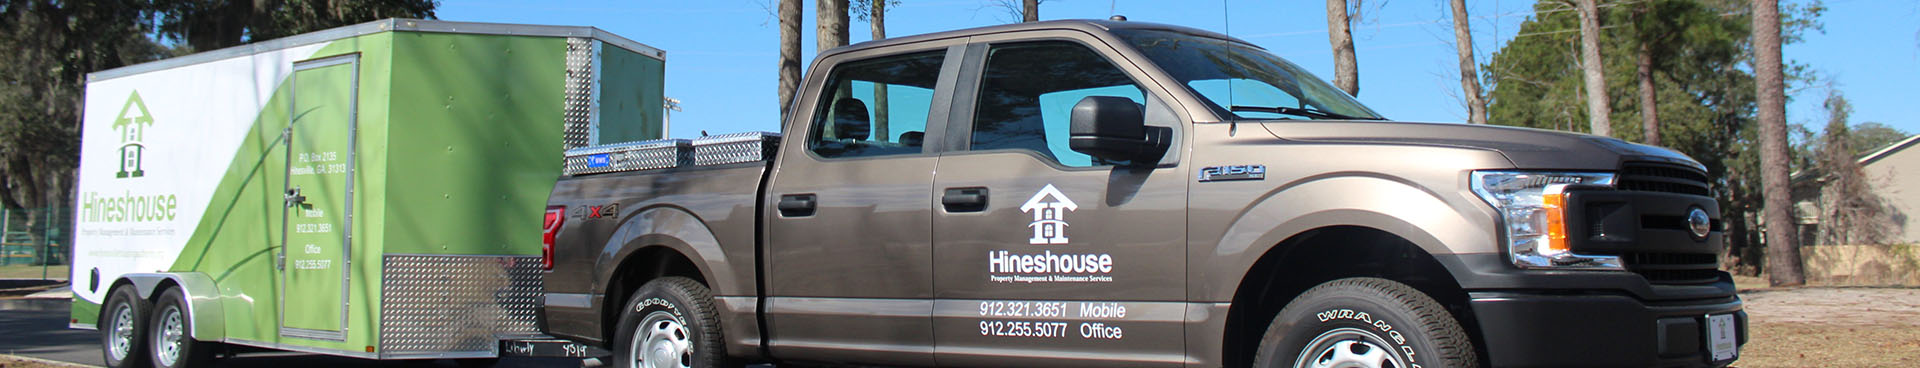 Hineshouse Property Management & Maintenance Services Fleet - Liberty County, GA